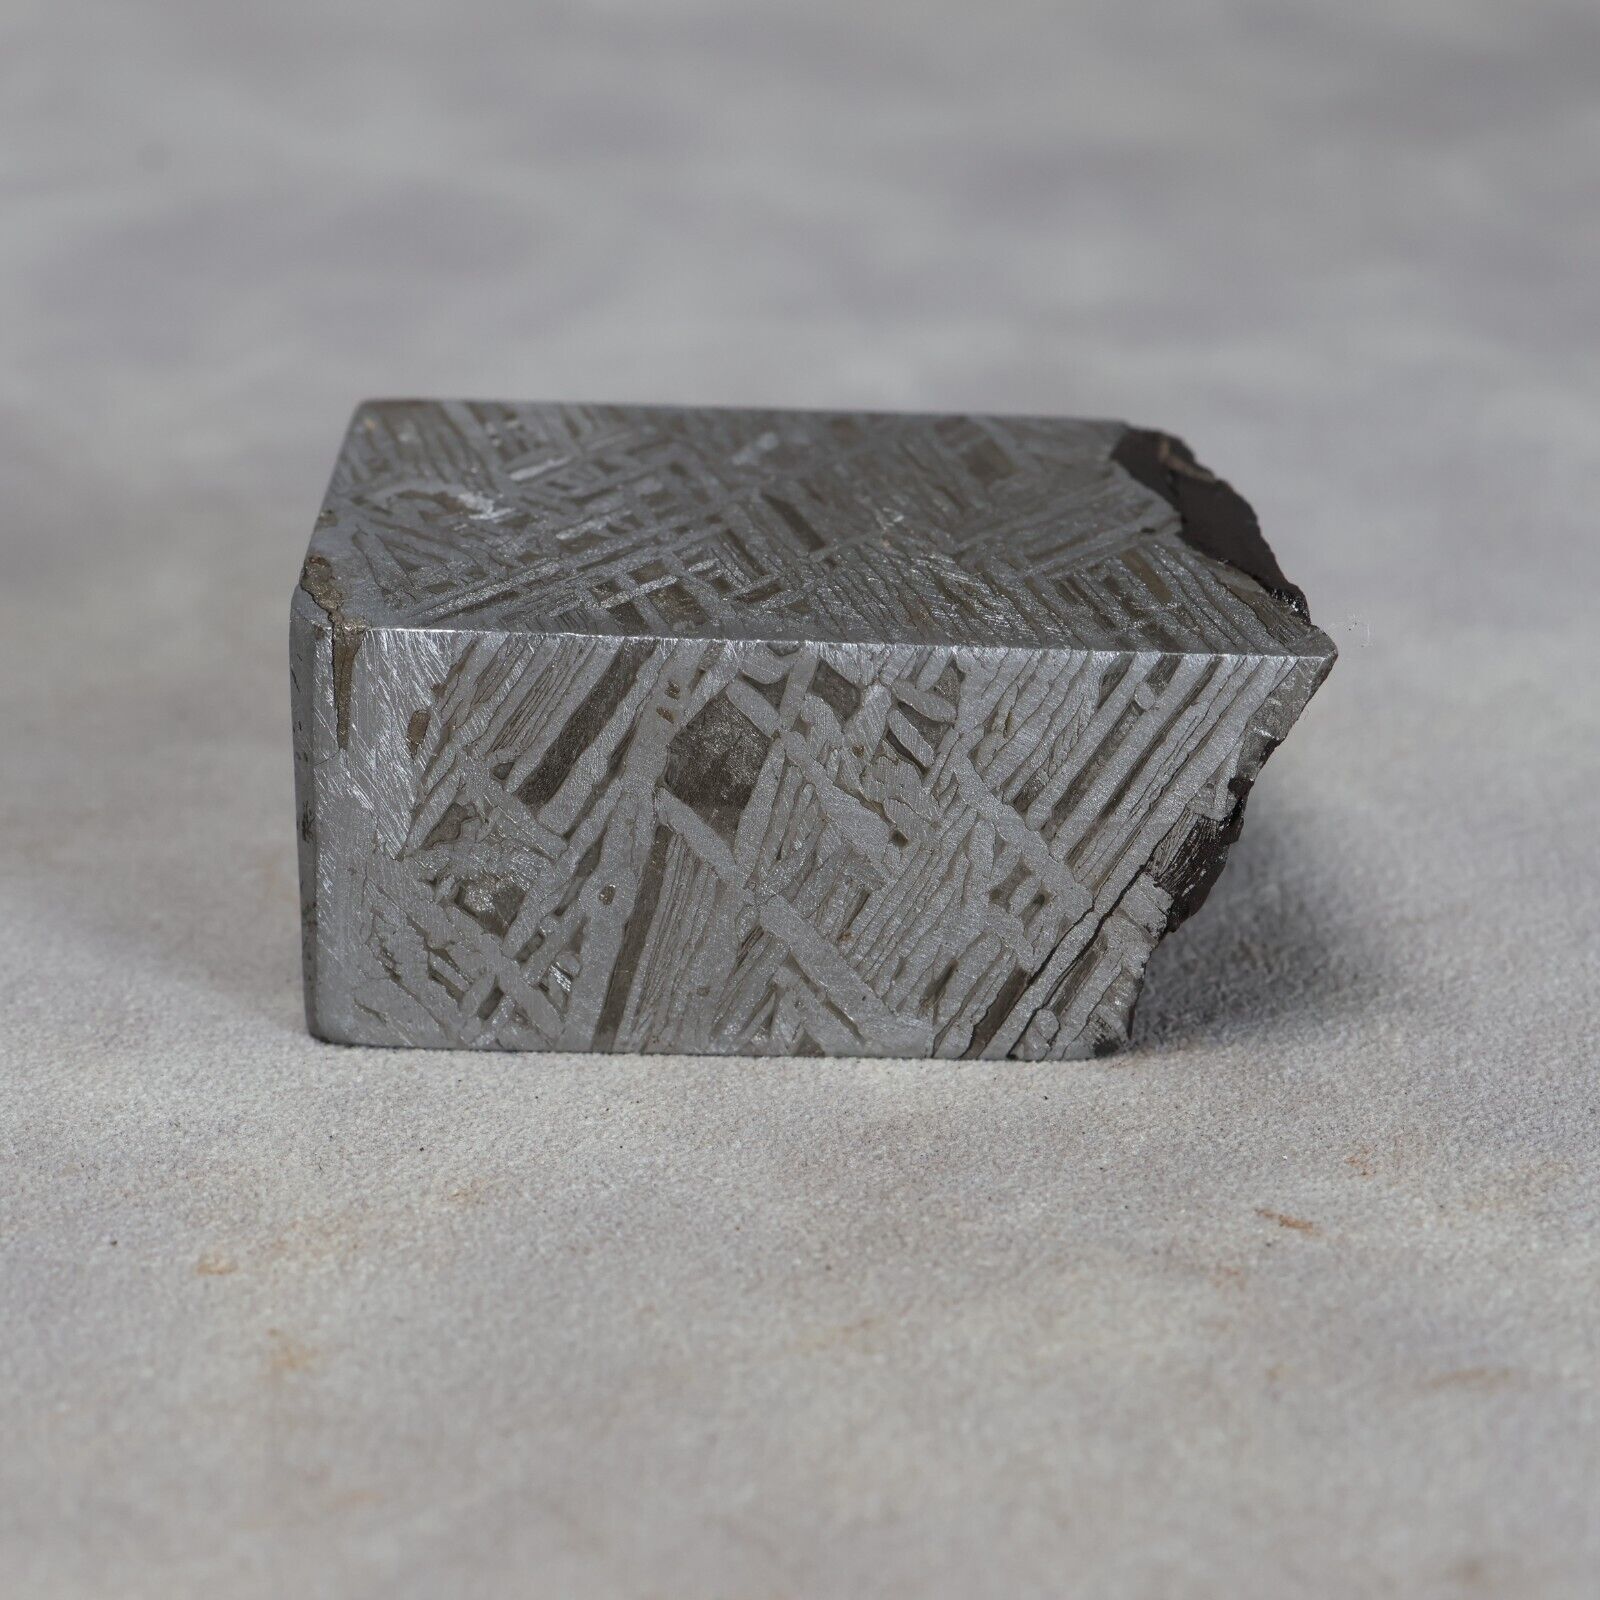 131g Muonionalusta meteorite,Natural meteorite slices,Collectibles,gift L11